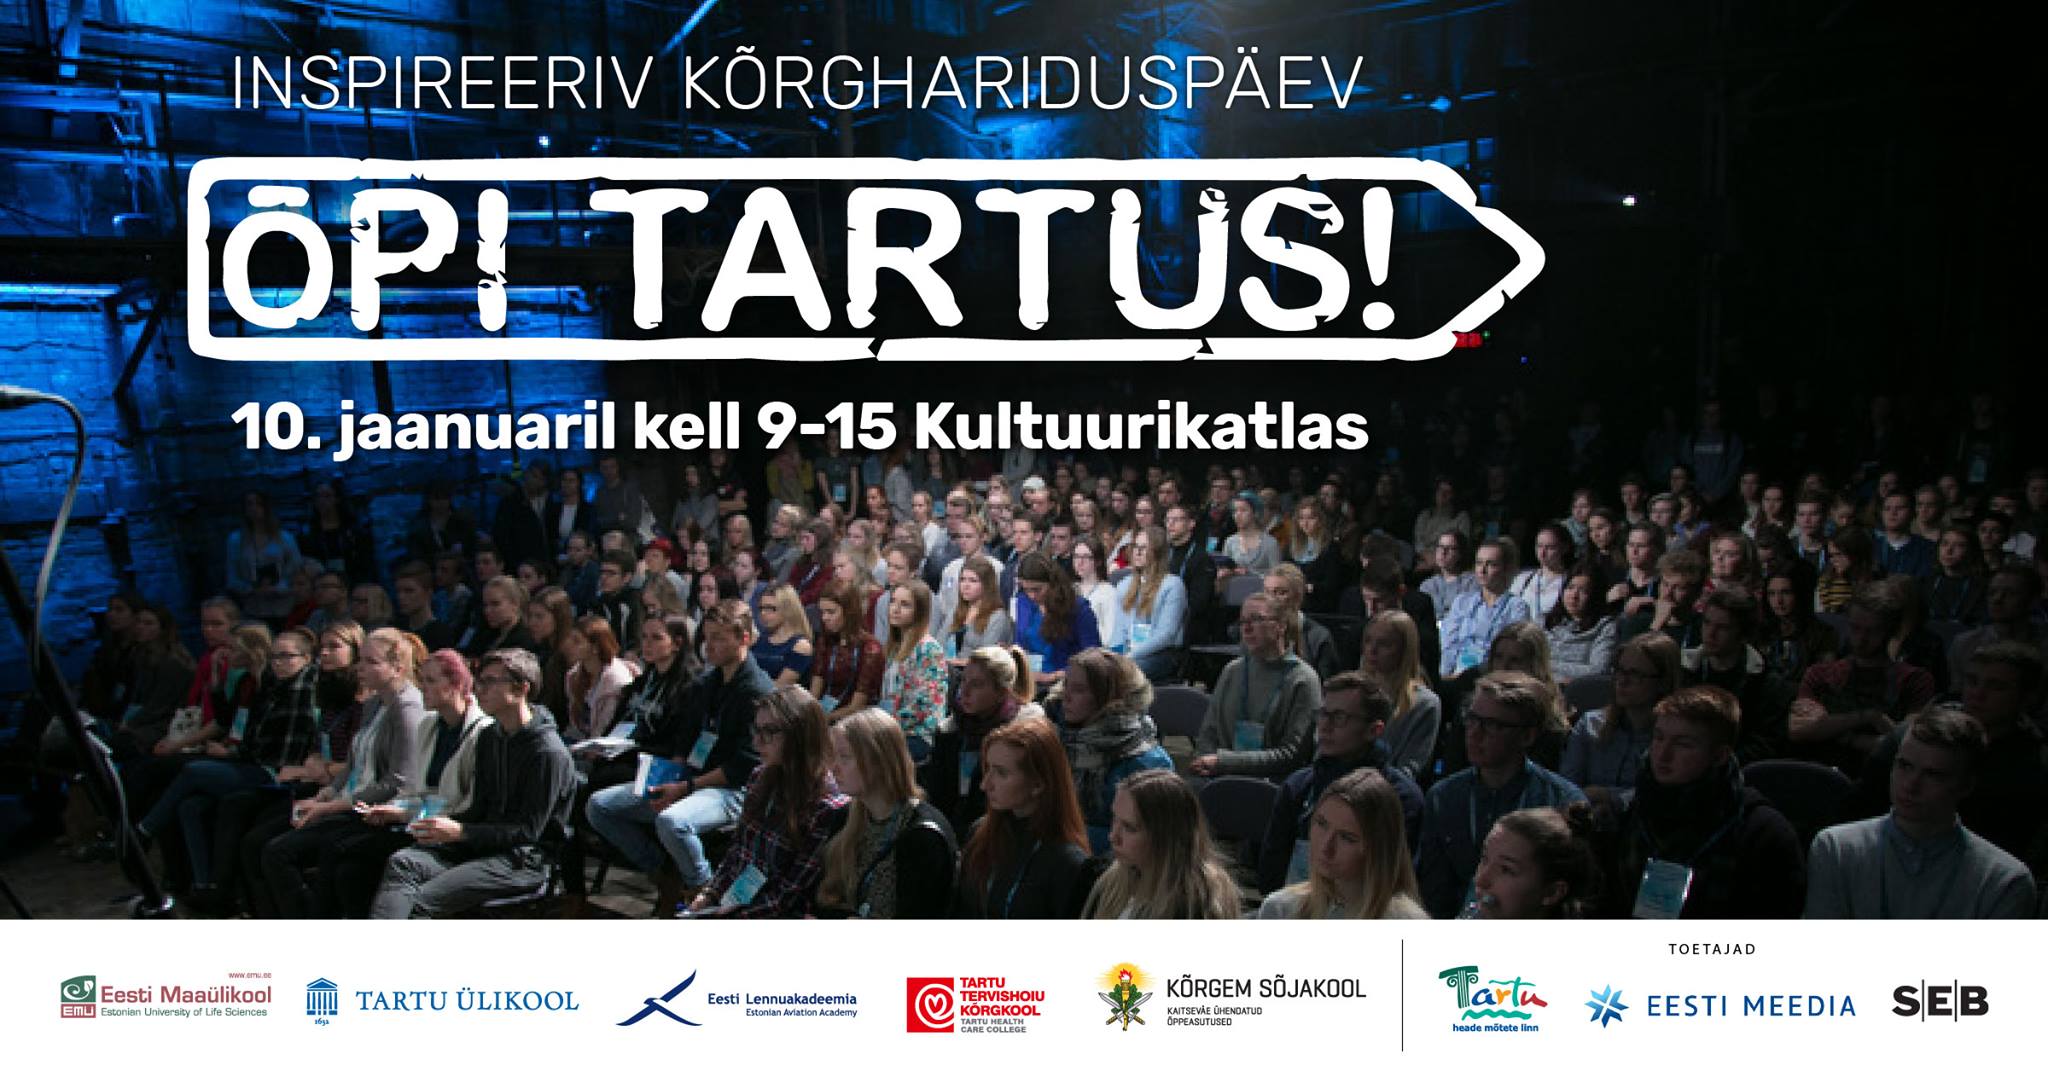 8863The higher education day event, Study in Tartu (Õpi Tartus)!